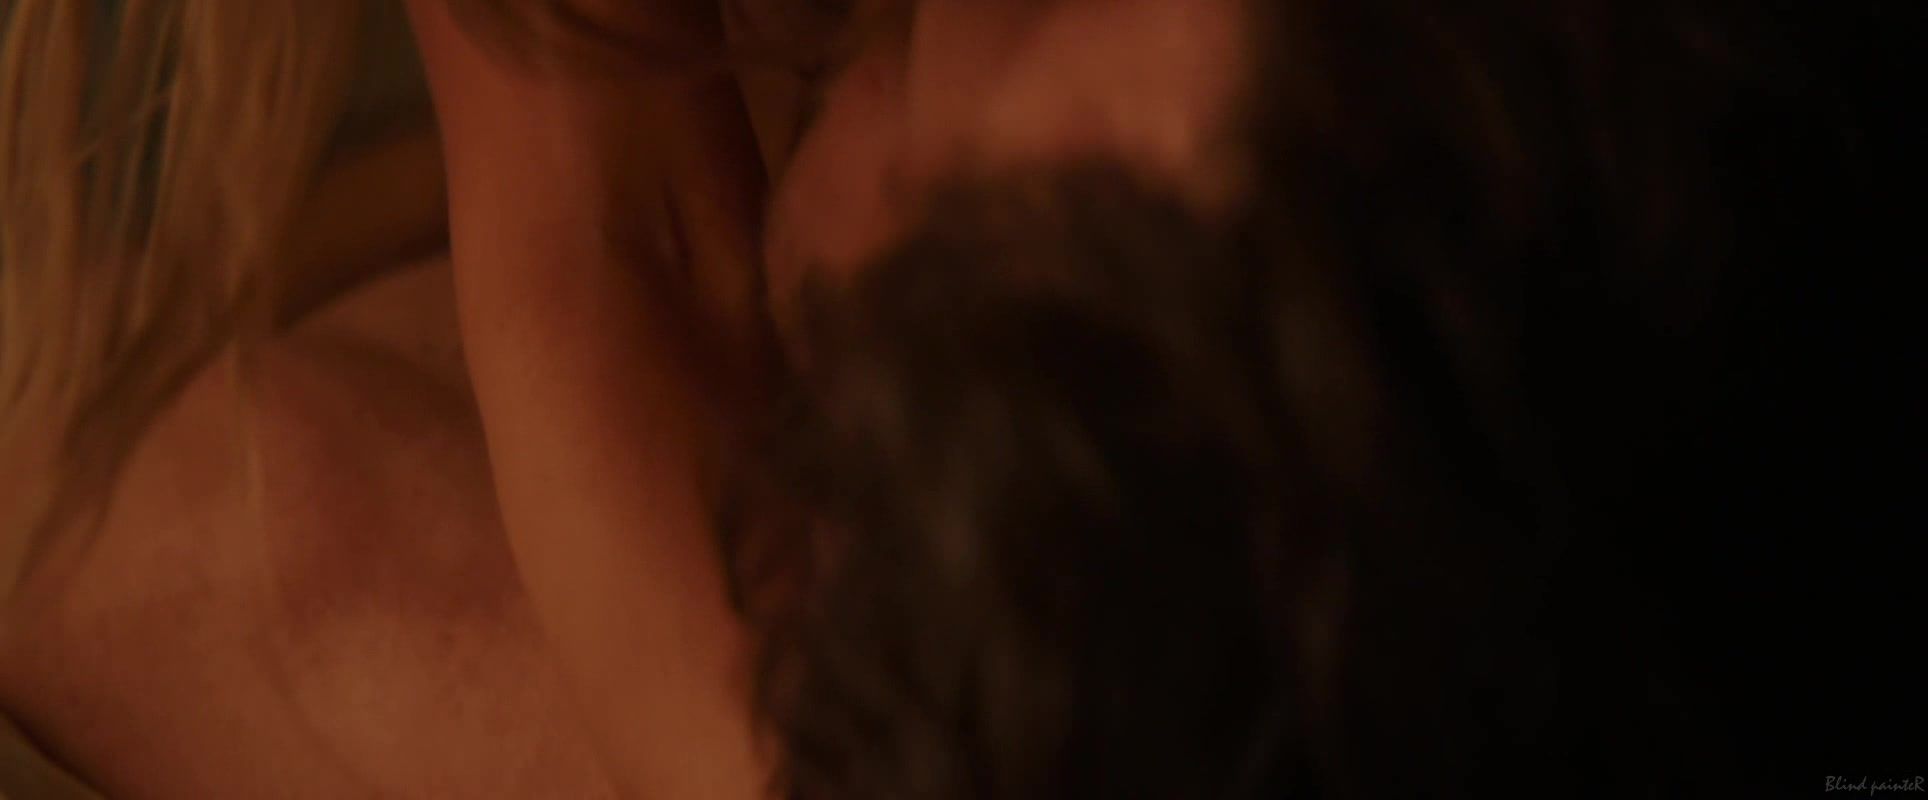 Farting Sex video Naomi Watts nude - Sunlight Jr. (2013) CzechCasting